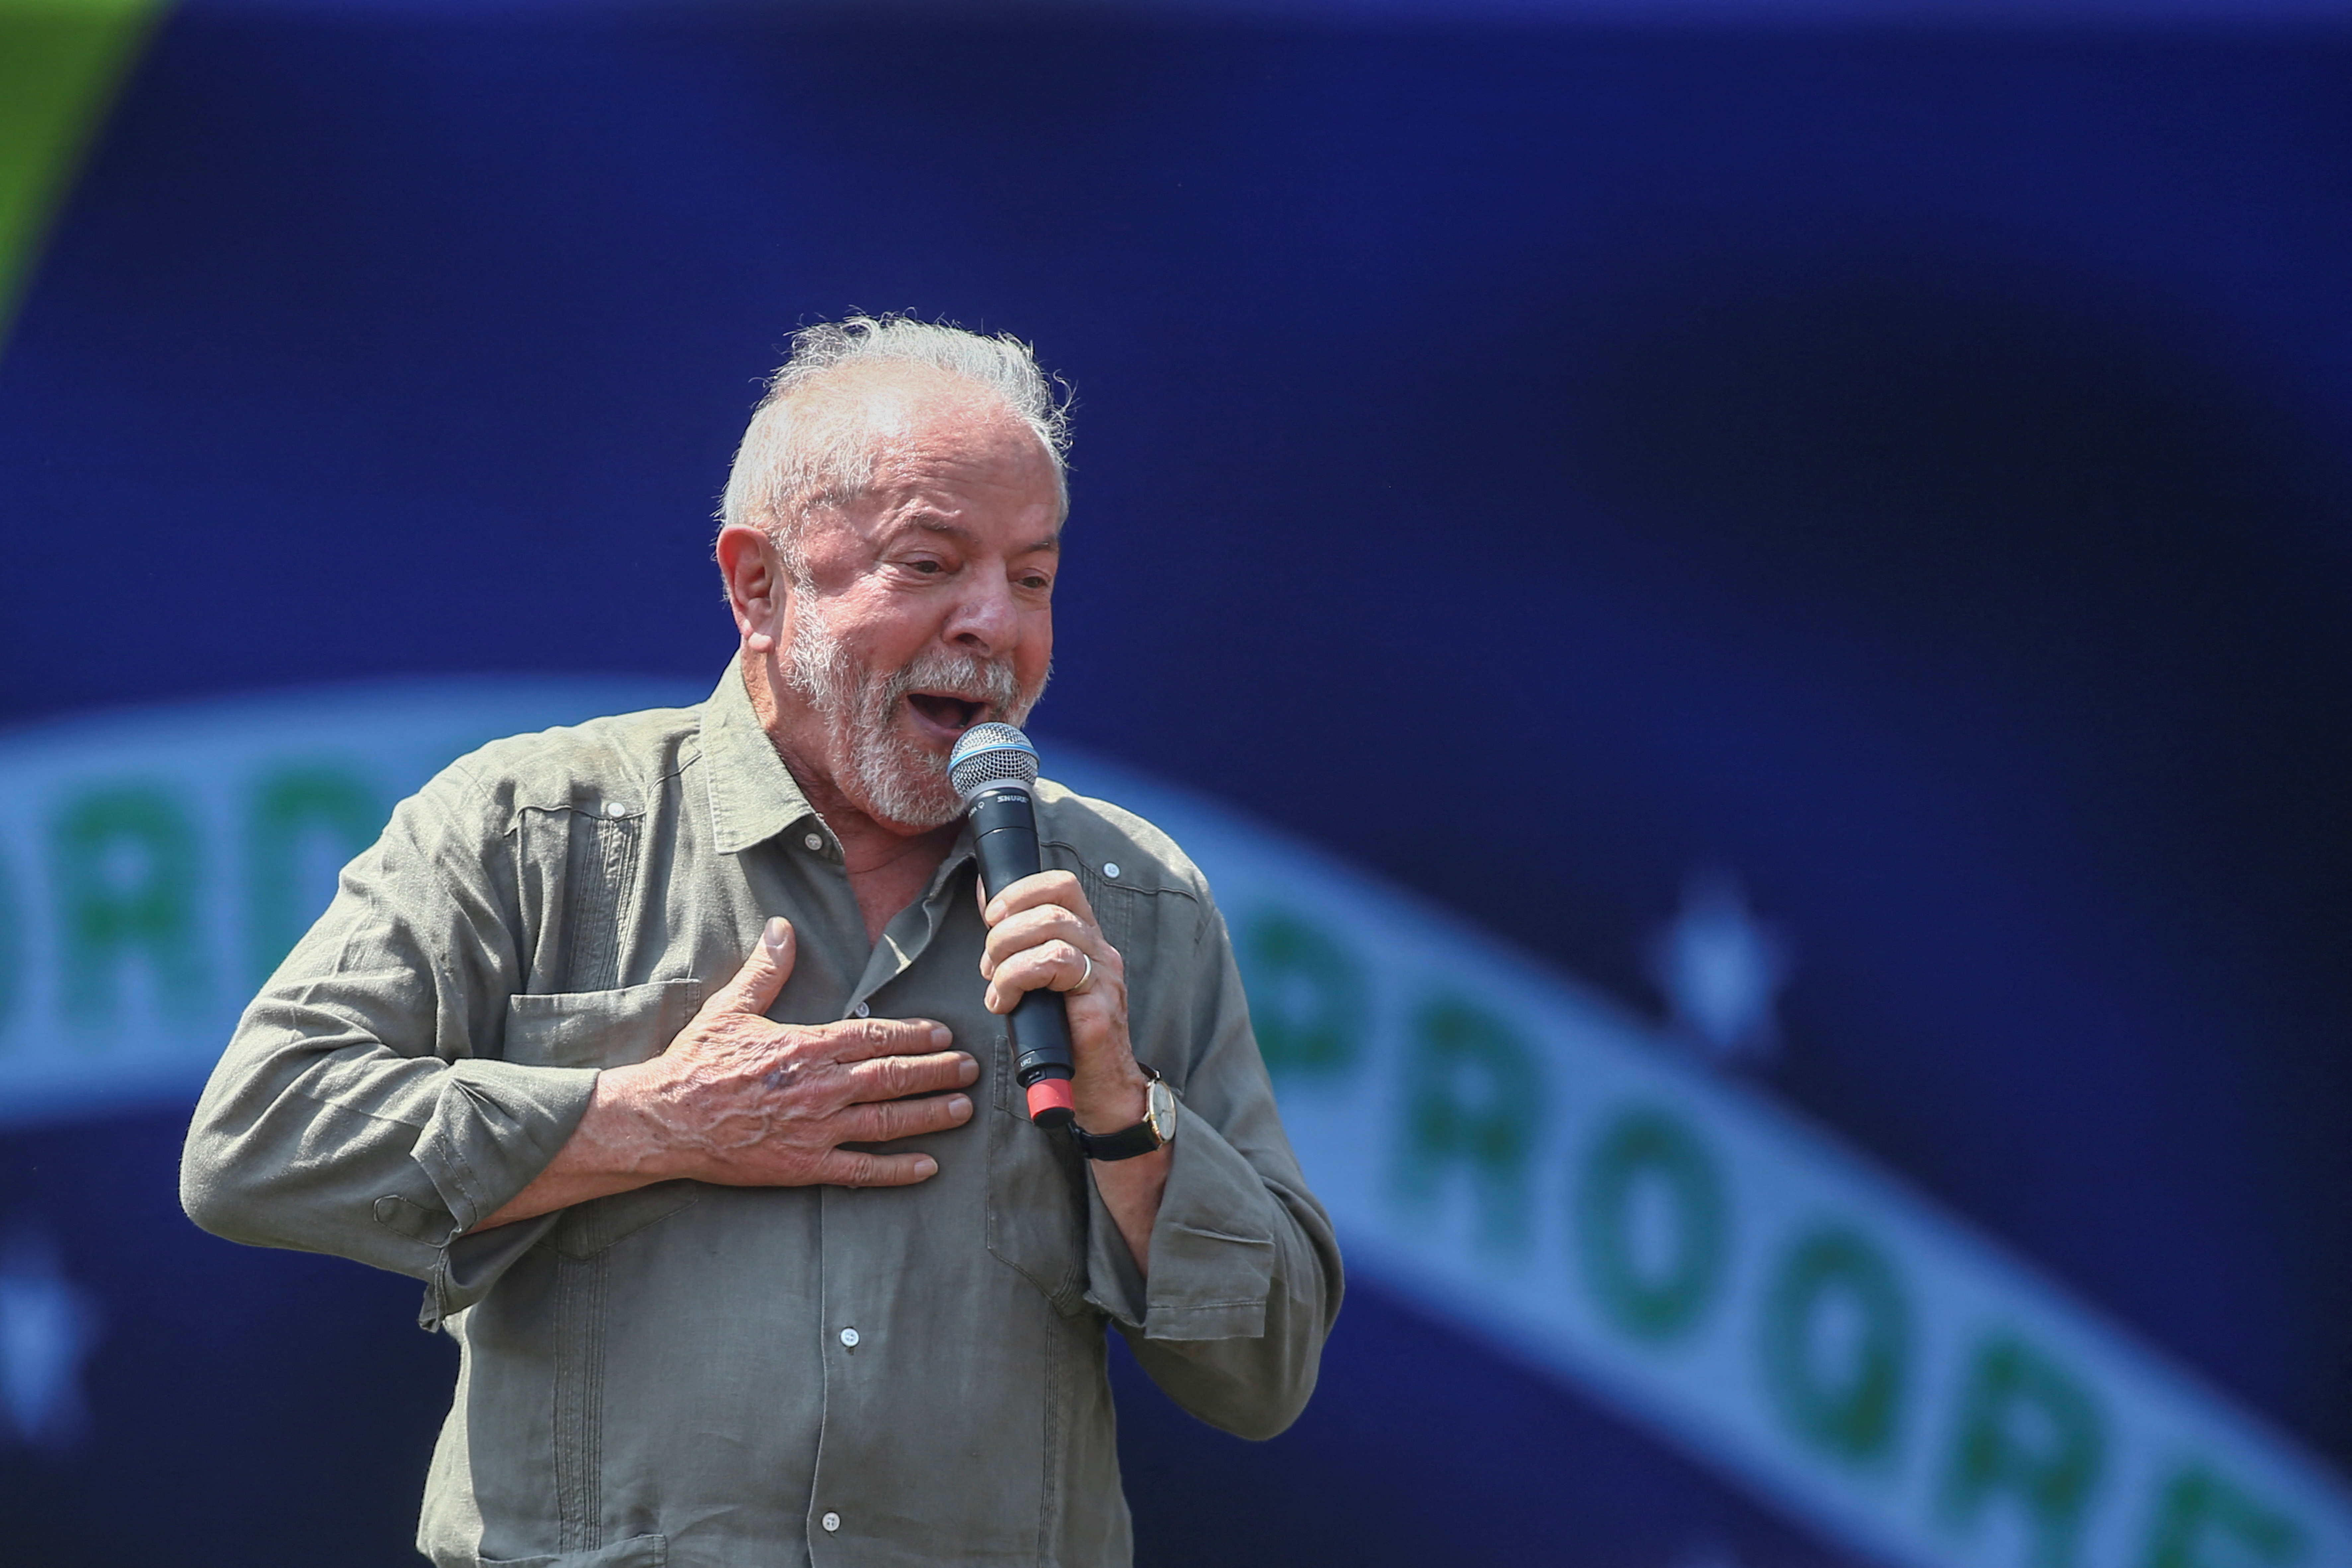 Workers' Party (PT) presidential candidate Luiz Inacio Lula da Silva